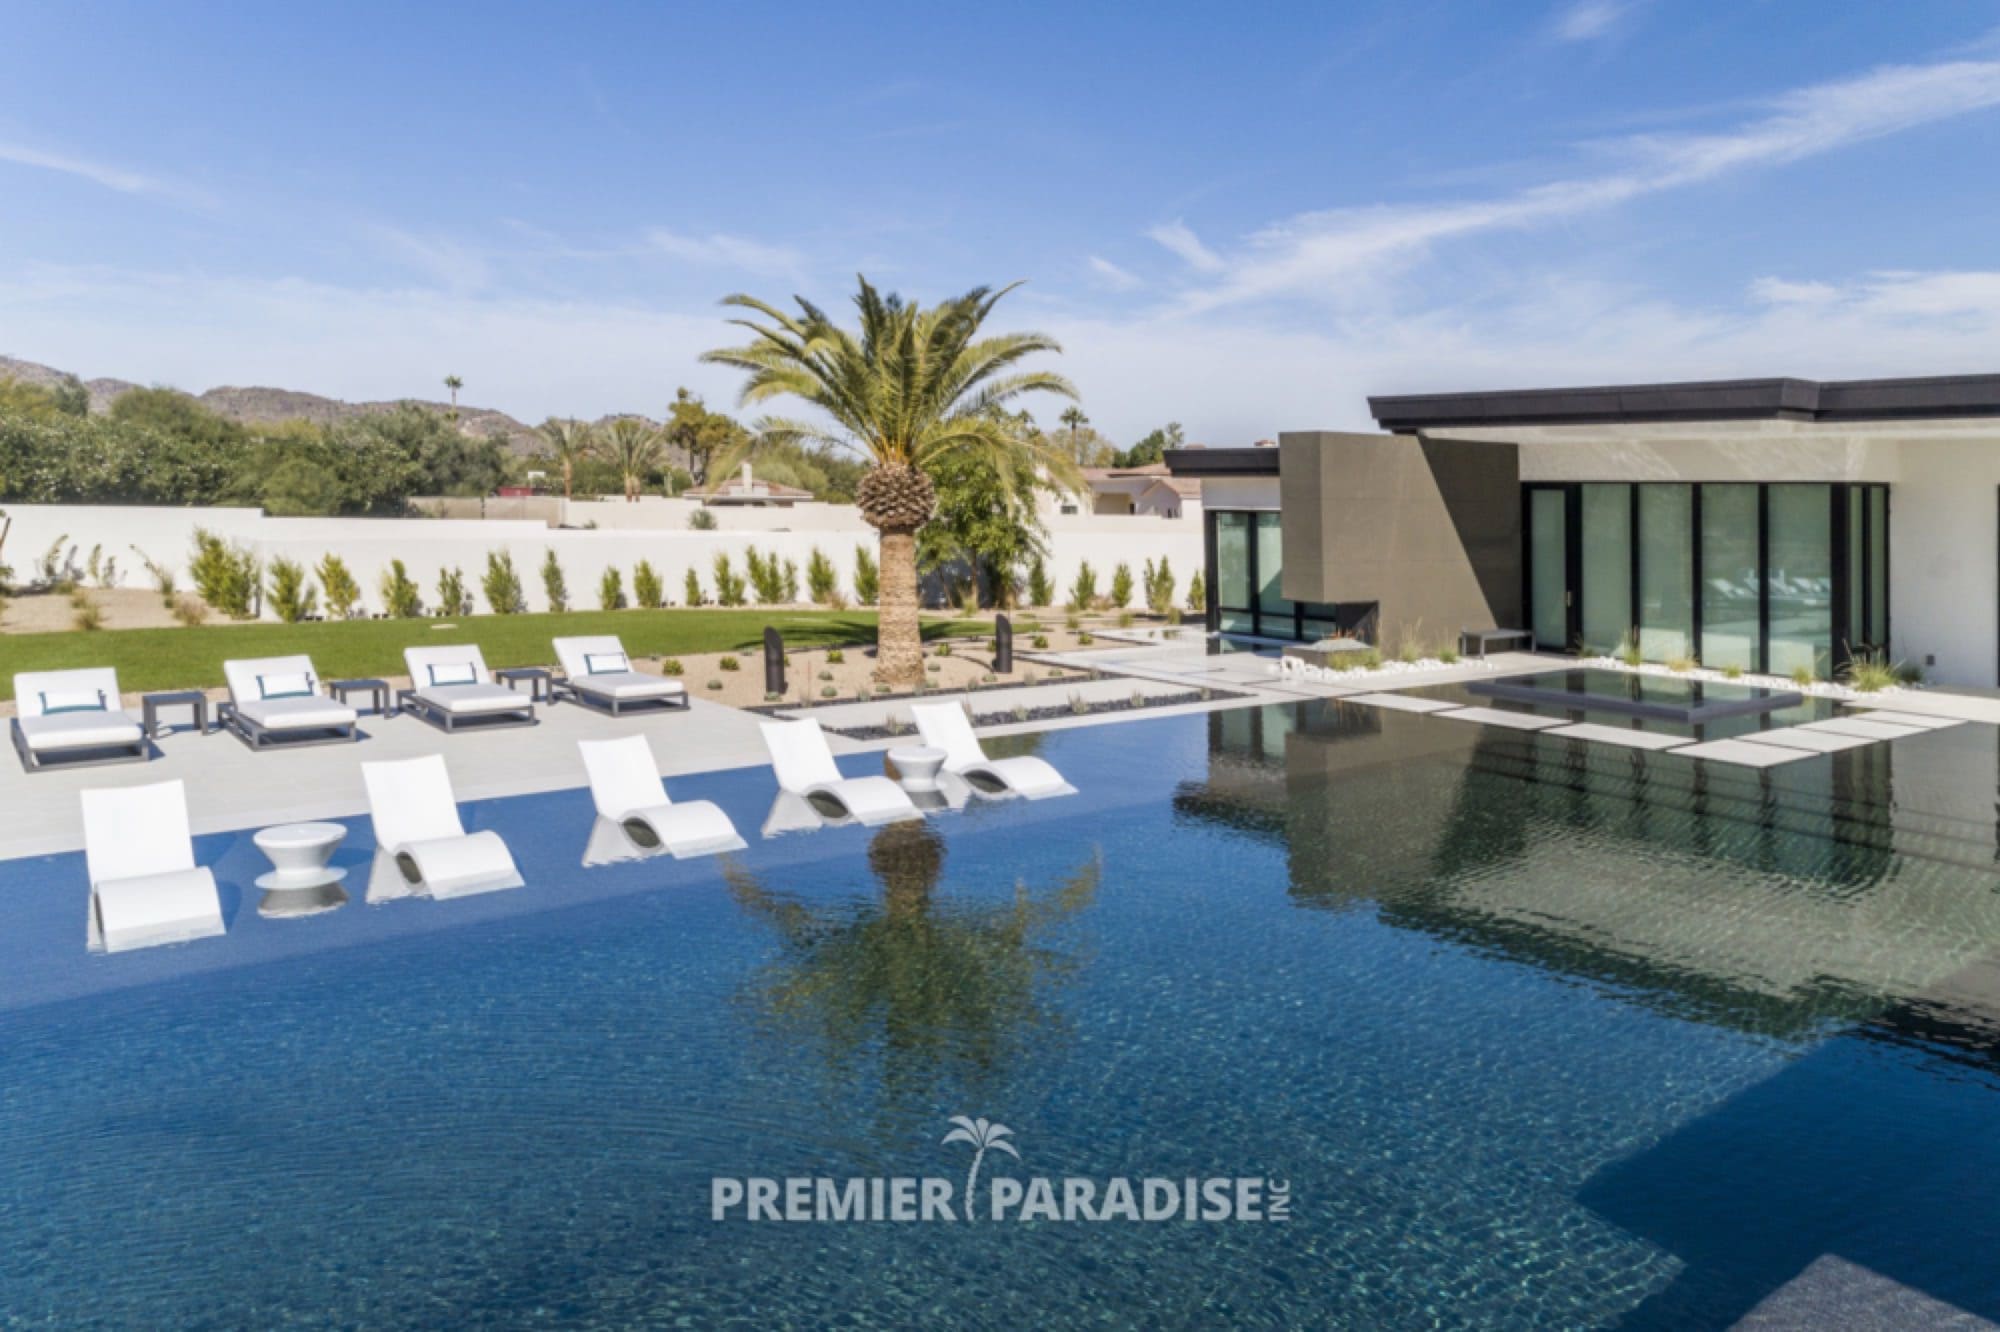 infinity edge pool design custom pool builder arizona premier paradise inc 7 watermarked